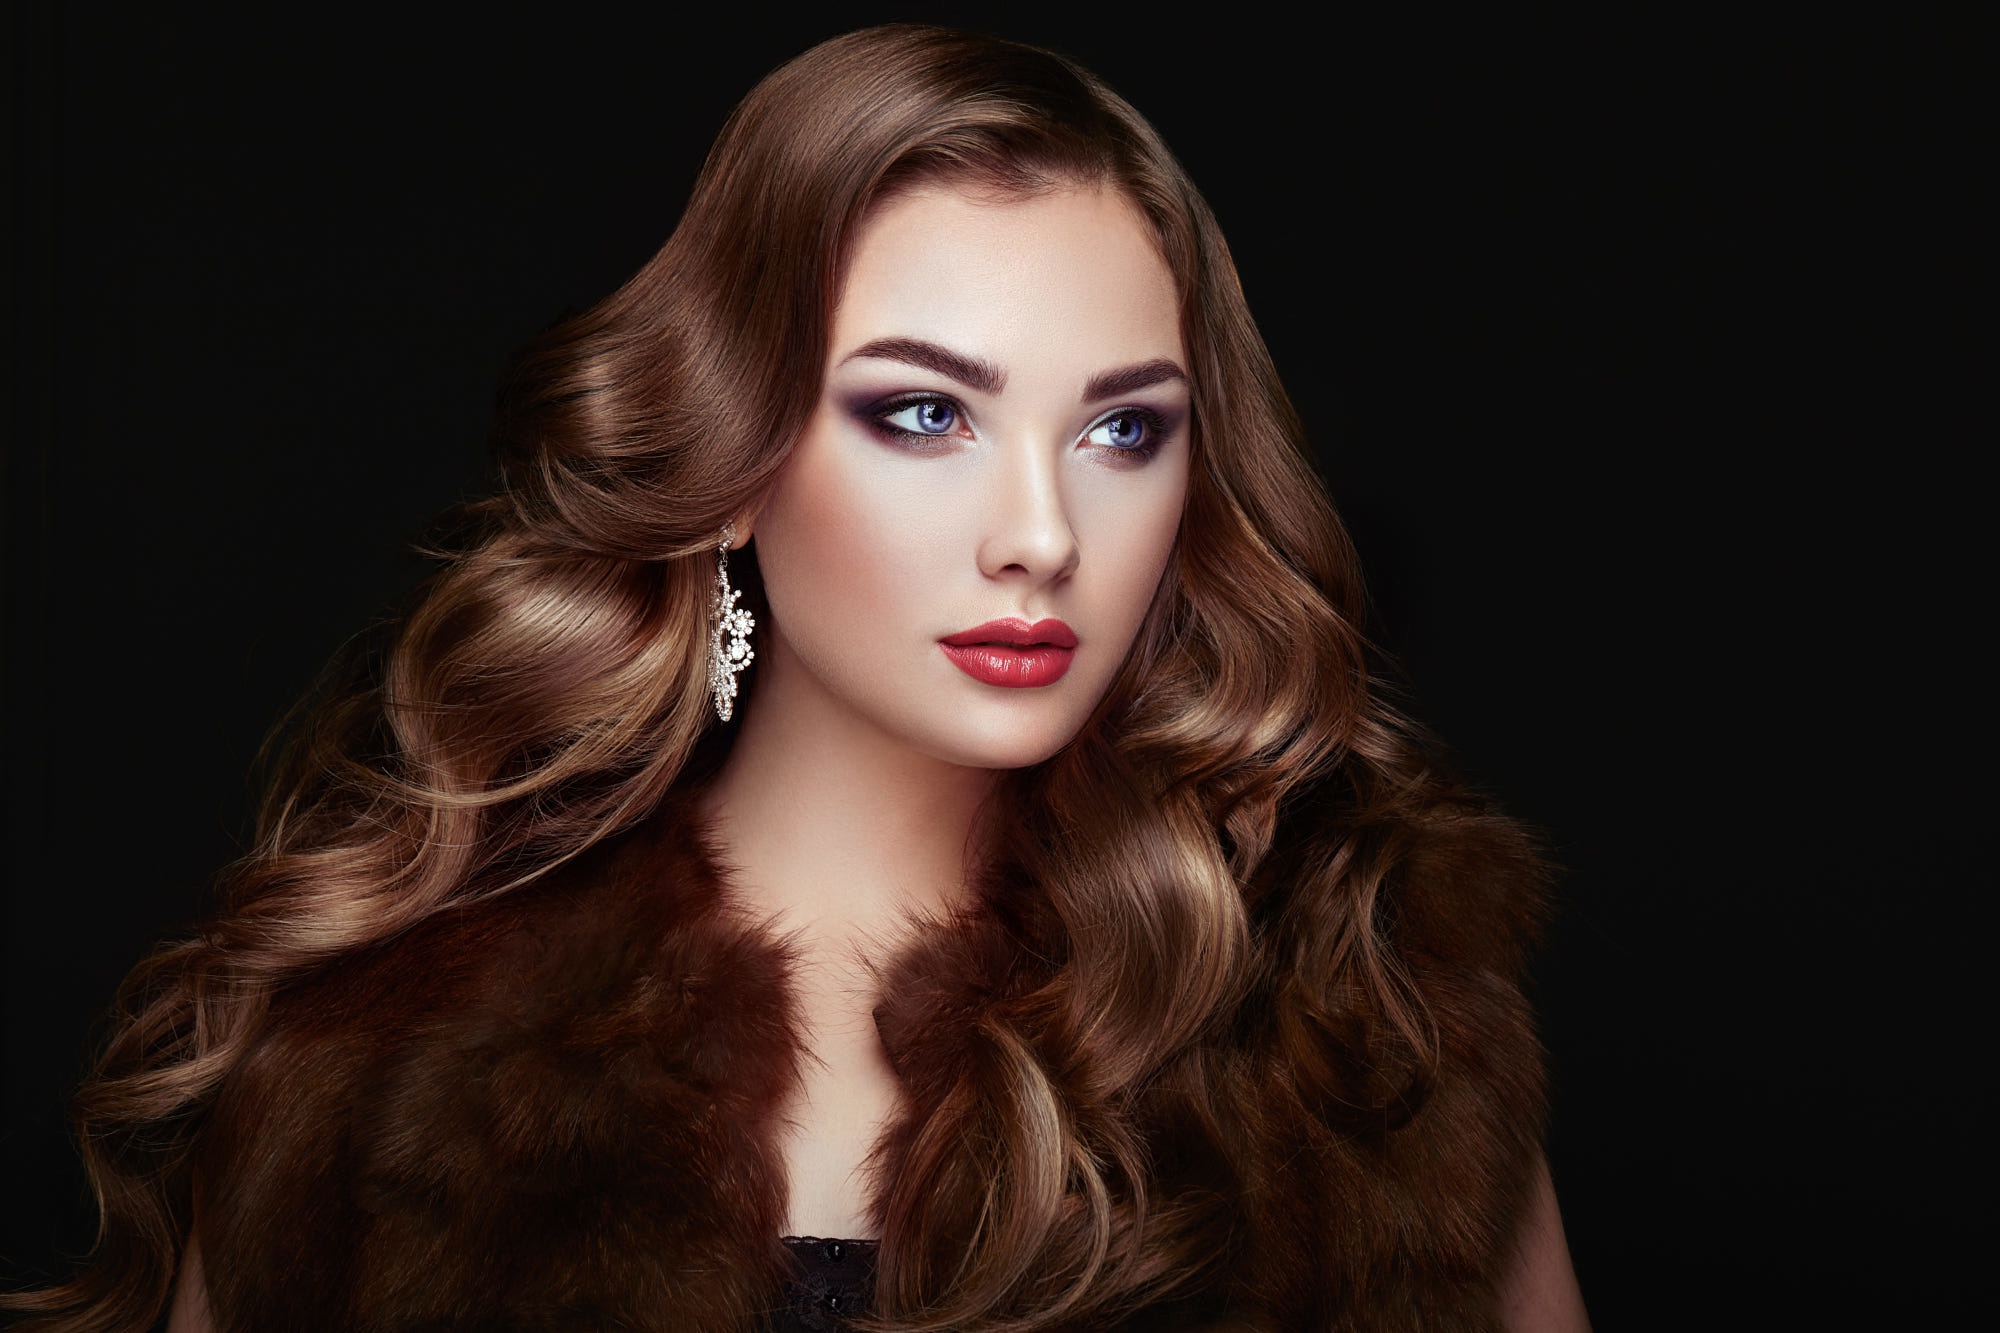 Makeup Red Lipstick Portrait Women Model Fur Coats Looking Away Curly Hair Black Background Irina Po 2000x1333